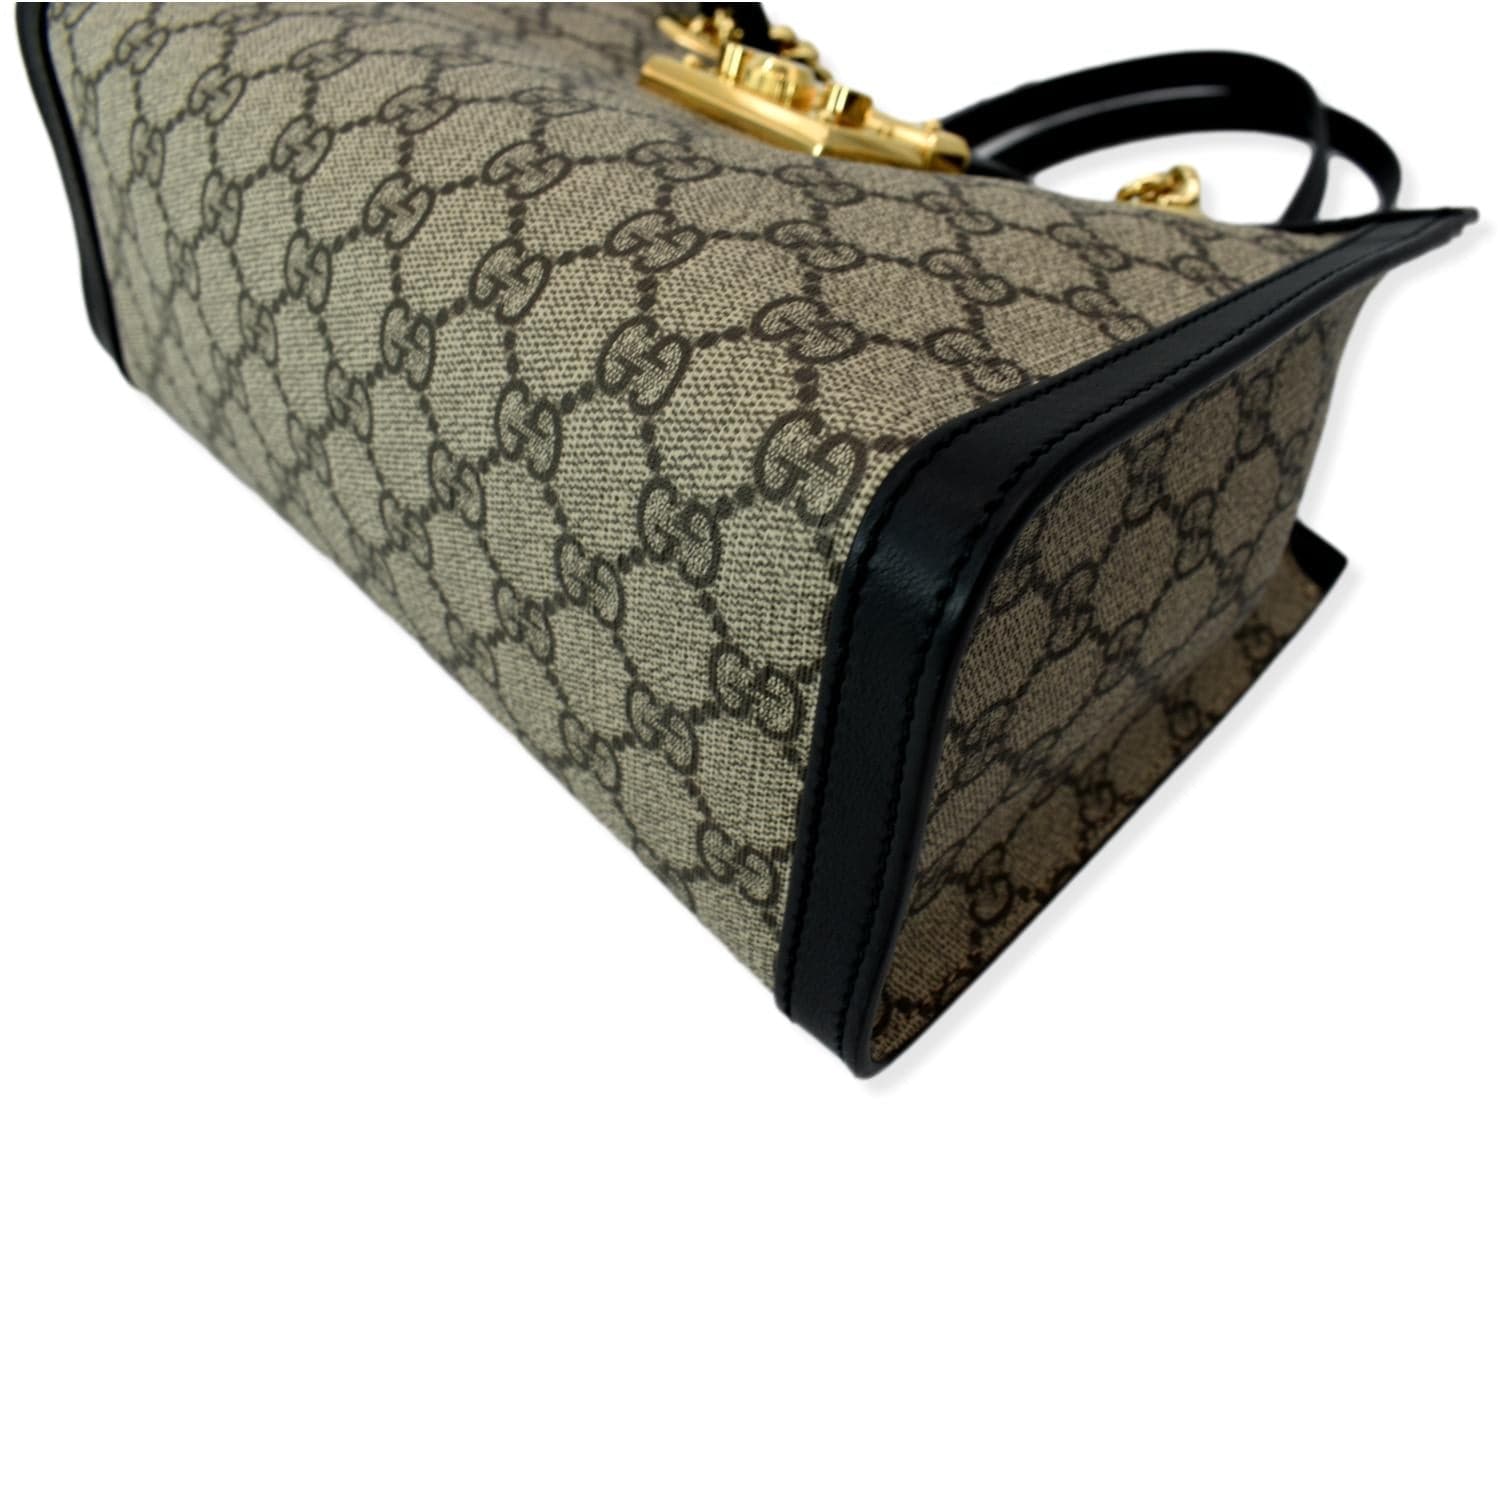 Gucci Black/Beige GG Supreme Canvas and Leather Small Padlock Shoulder Bag  Gucci